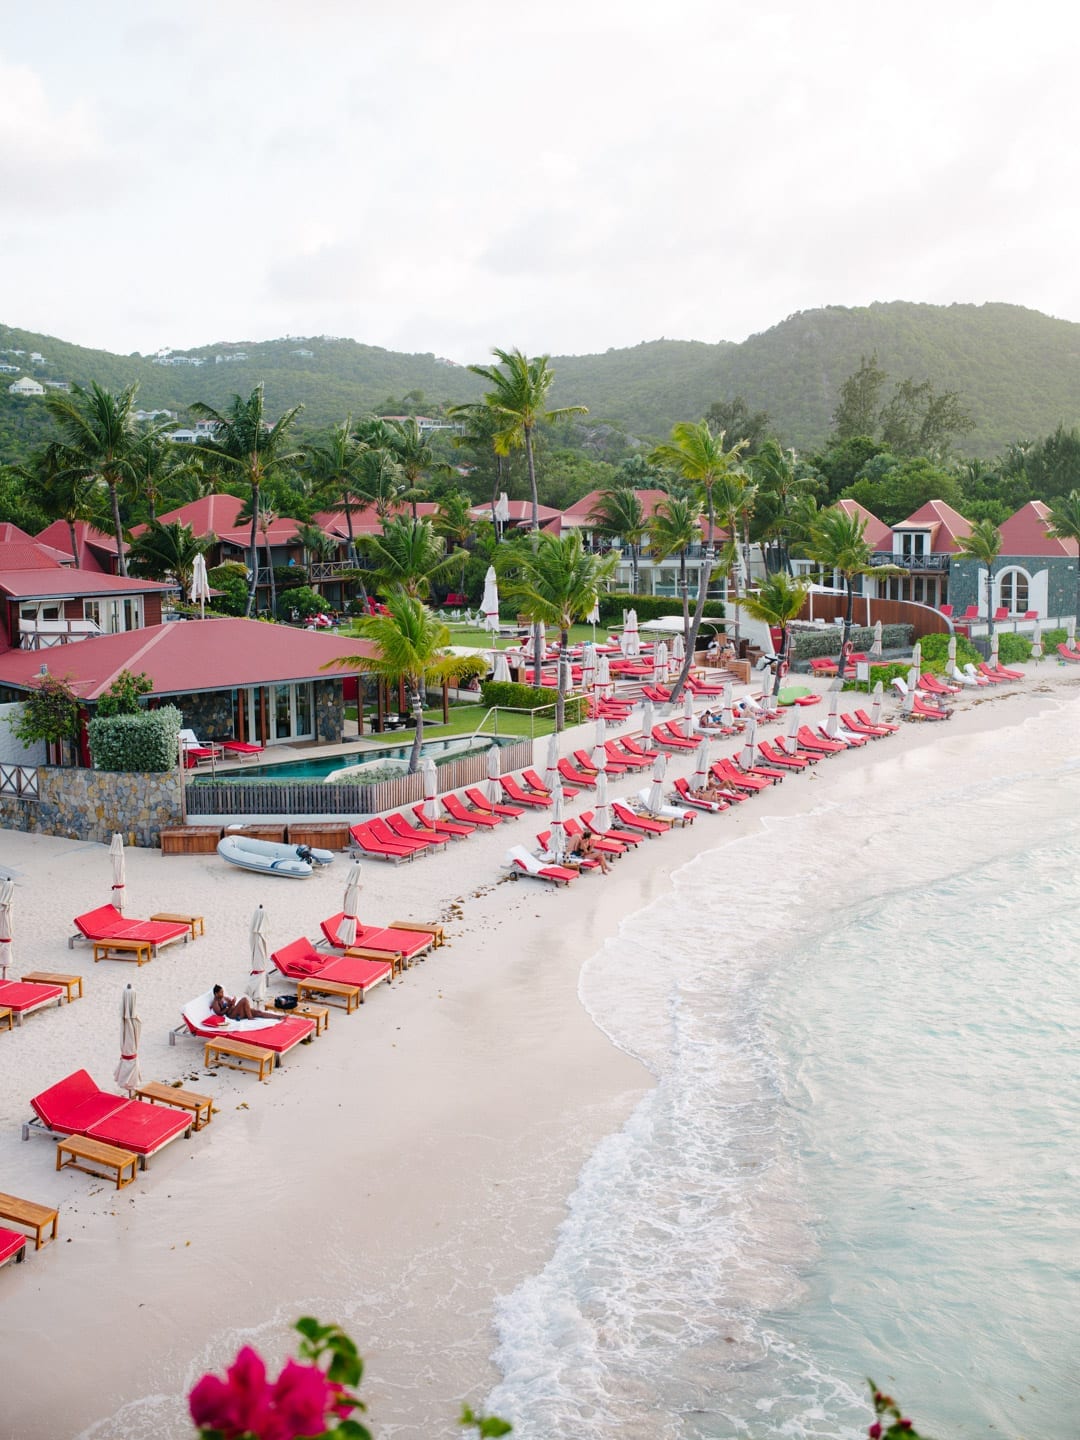 The Caribbean's Most Glamorous Hotel: Eden Rock St. Barths